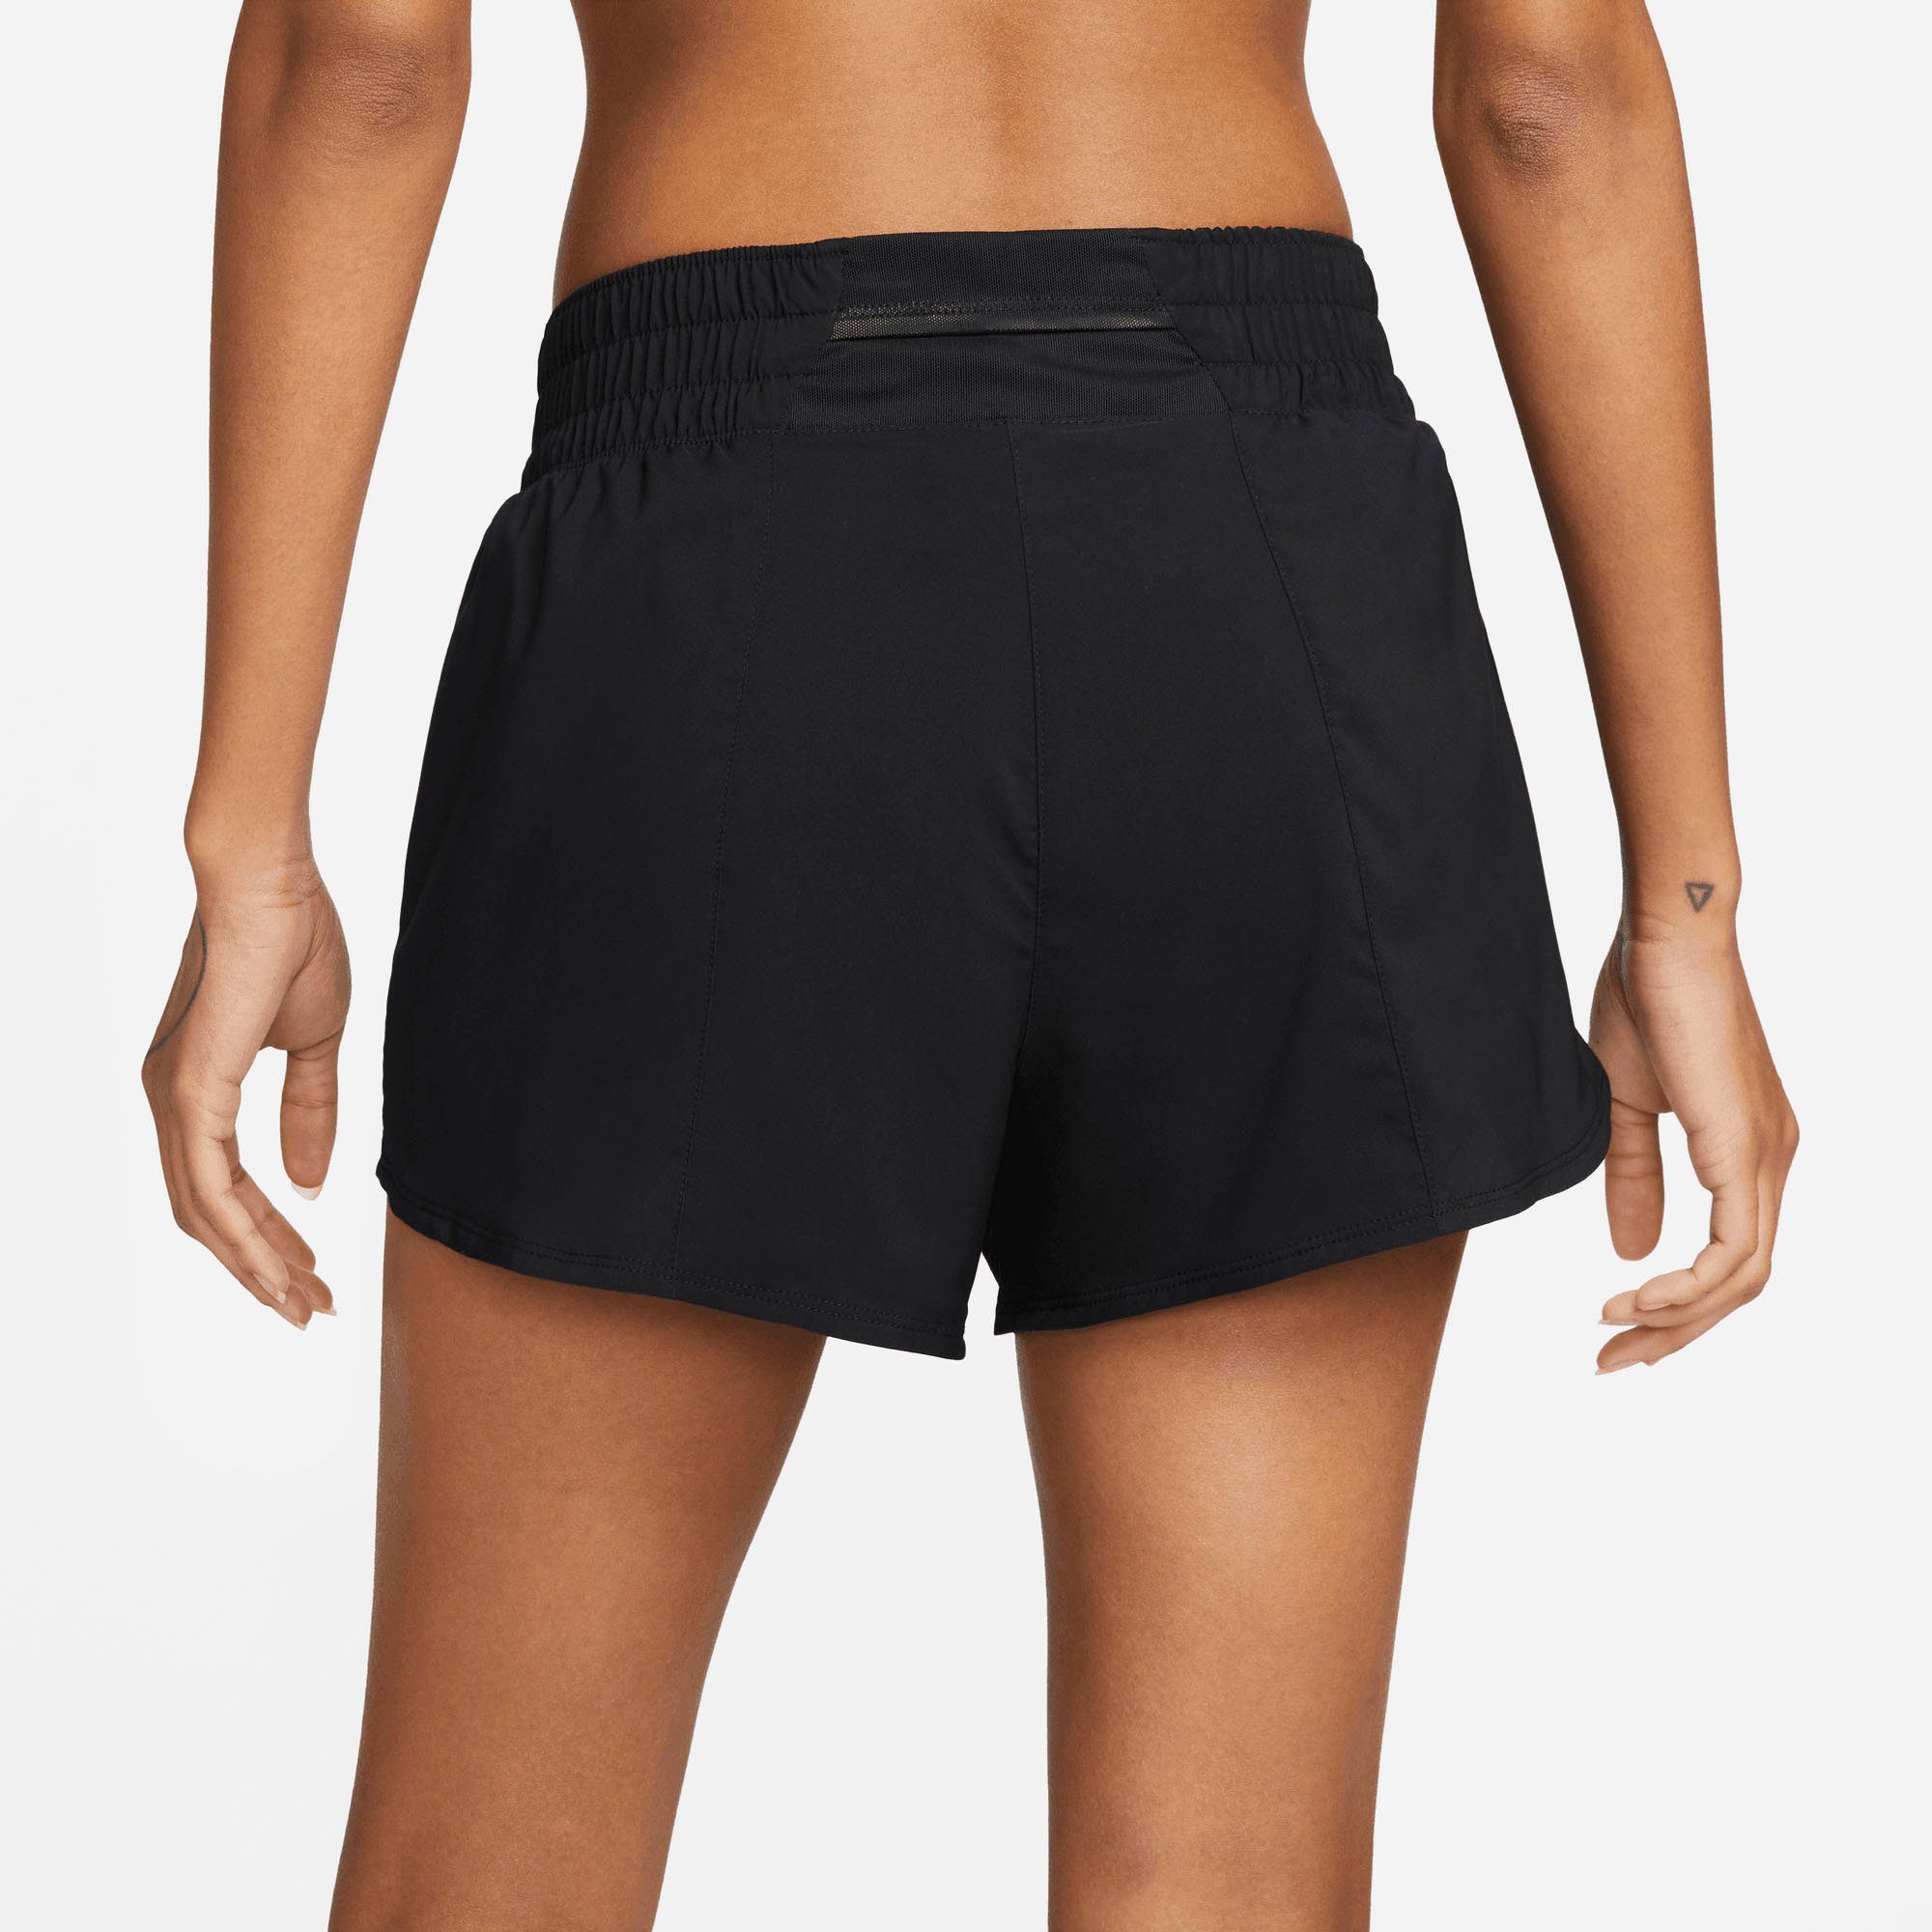 Nike BLACK Laufshorts Shorts Swoosh Women's